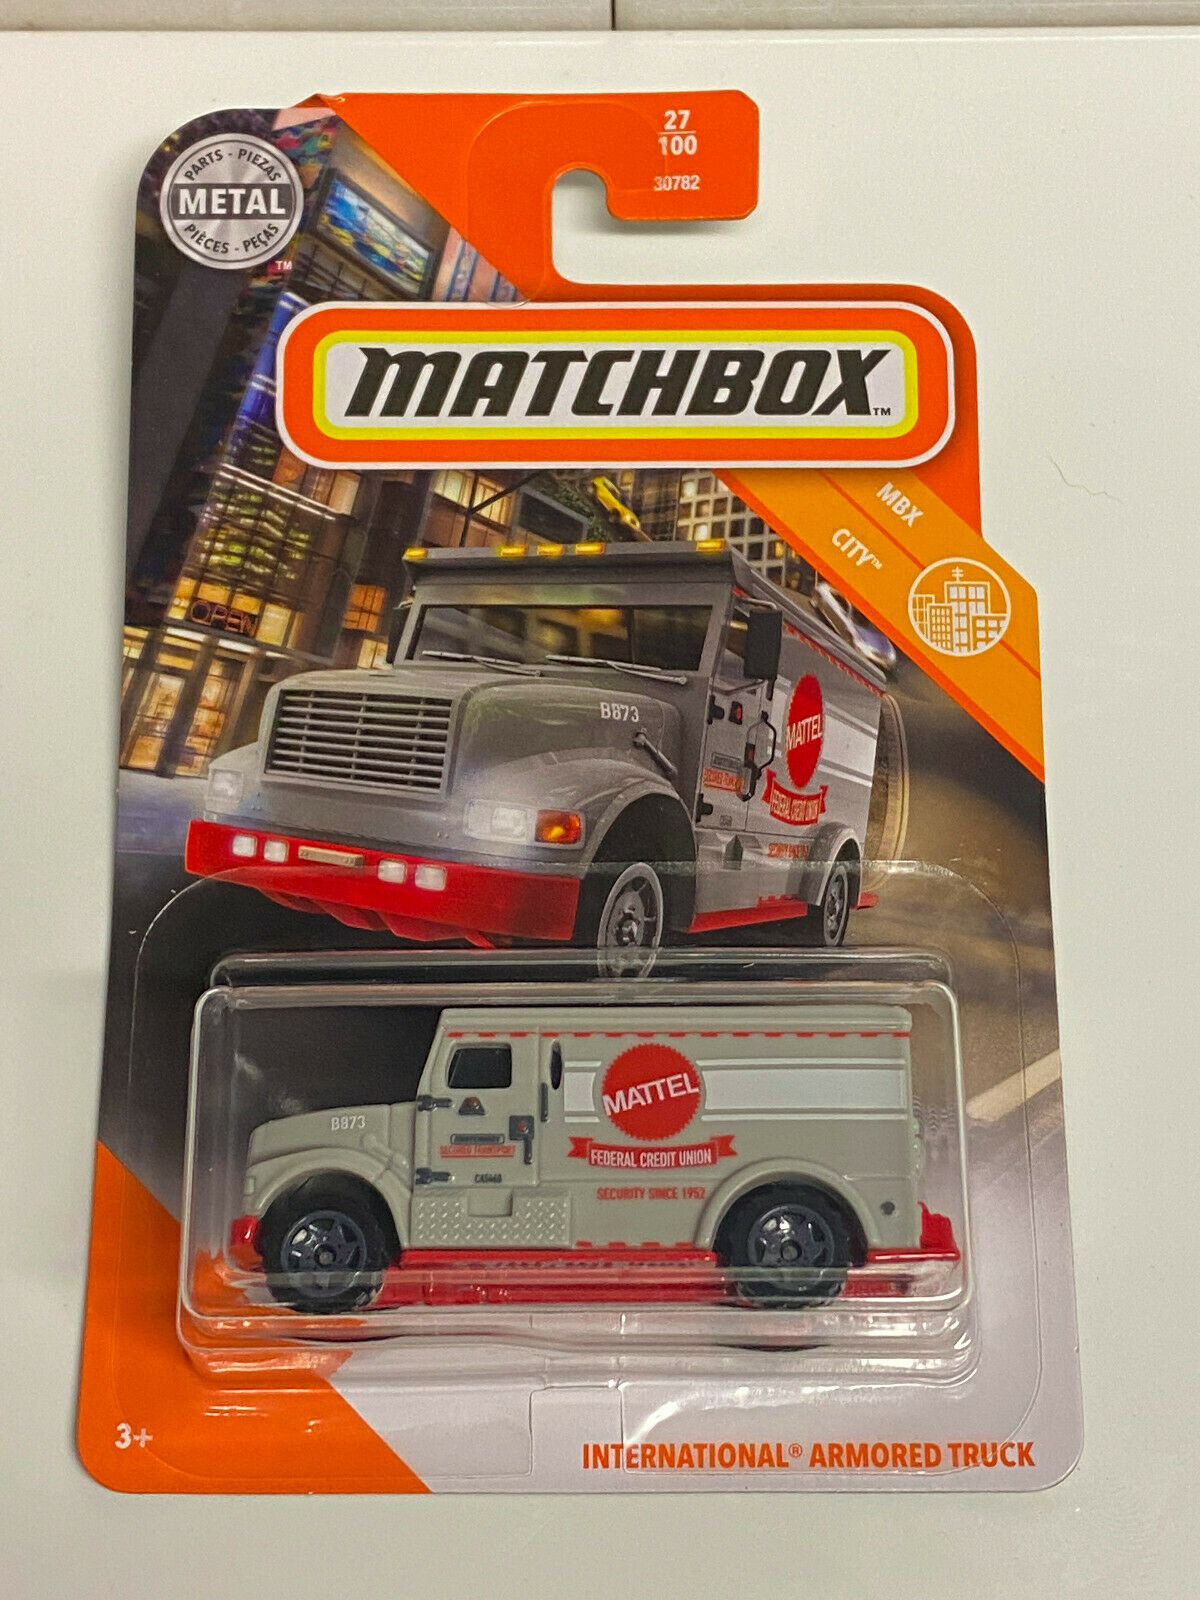 2020 Matchbox International Armoured Truck Mattel Federal Credit Union NIP